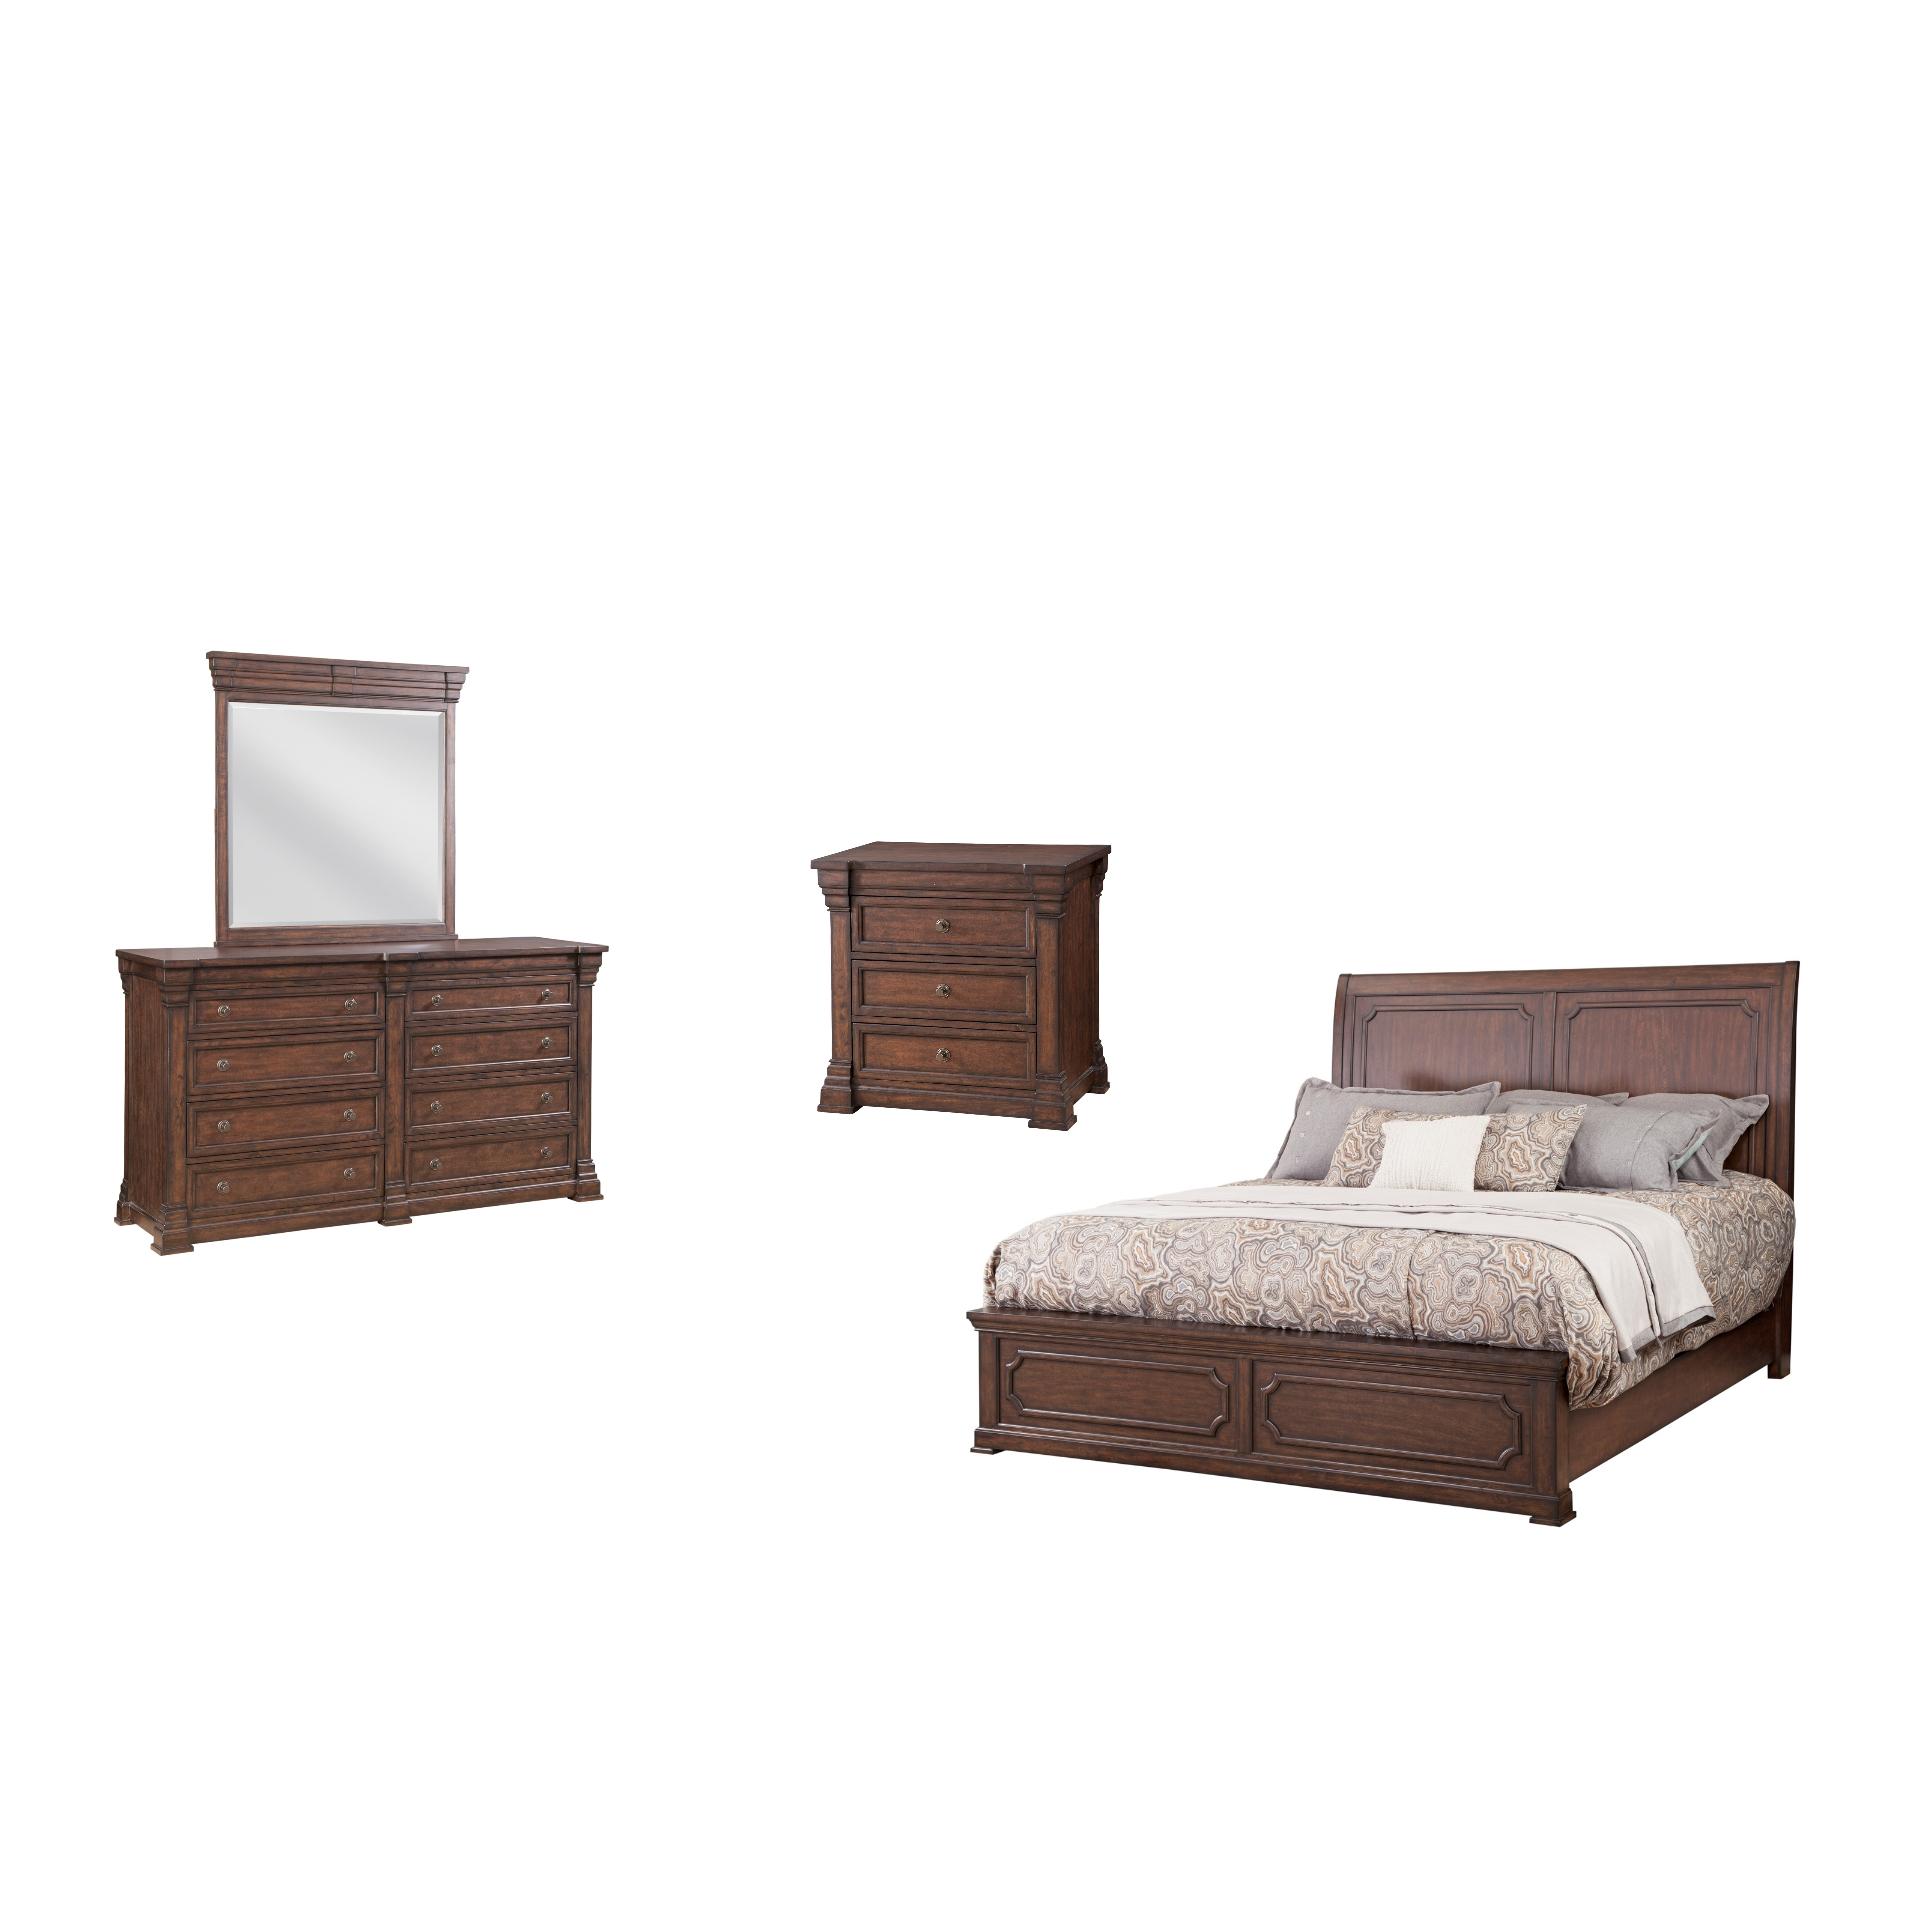 Traditional, Transitional Sleigh Bedroom Set Kestrel Hills 4800-50SLPN 4800-QSLPN-4PC in Tobacco, Mahogany 